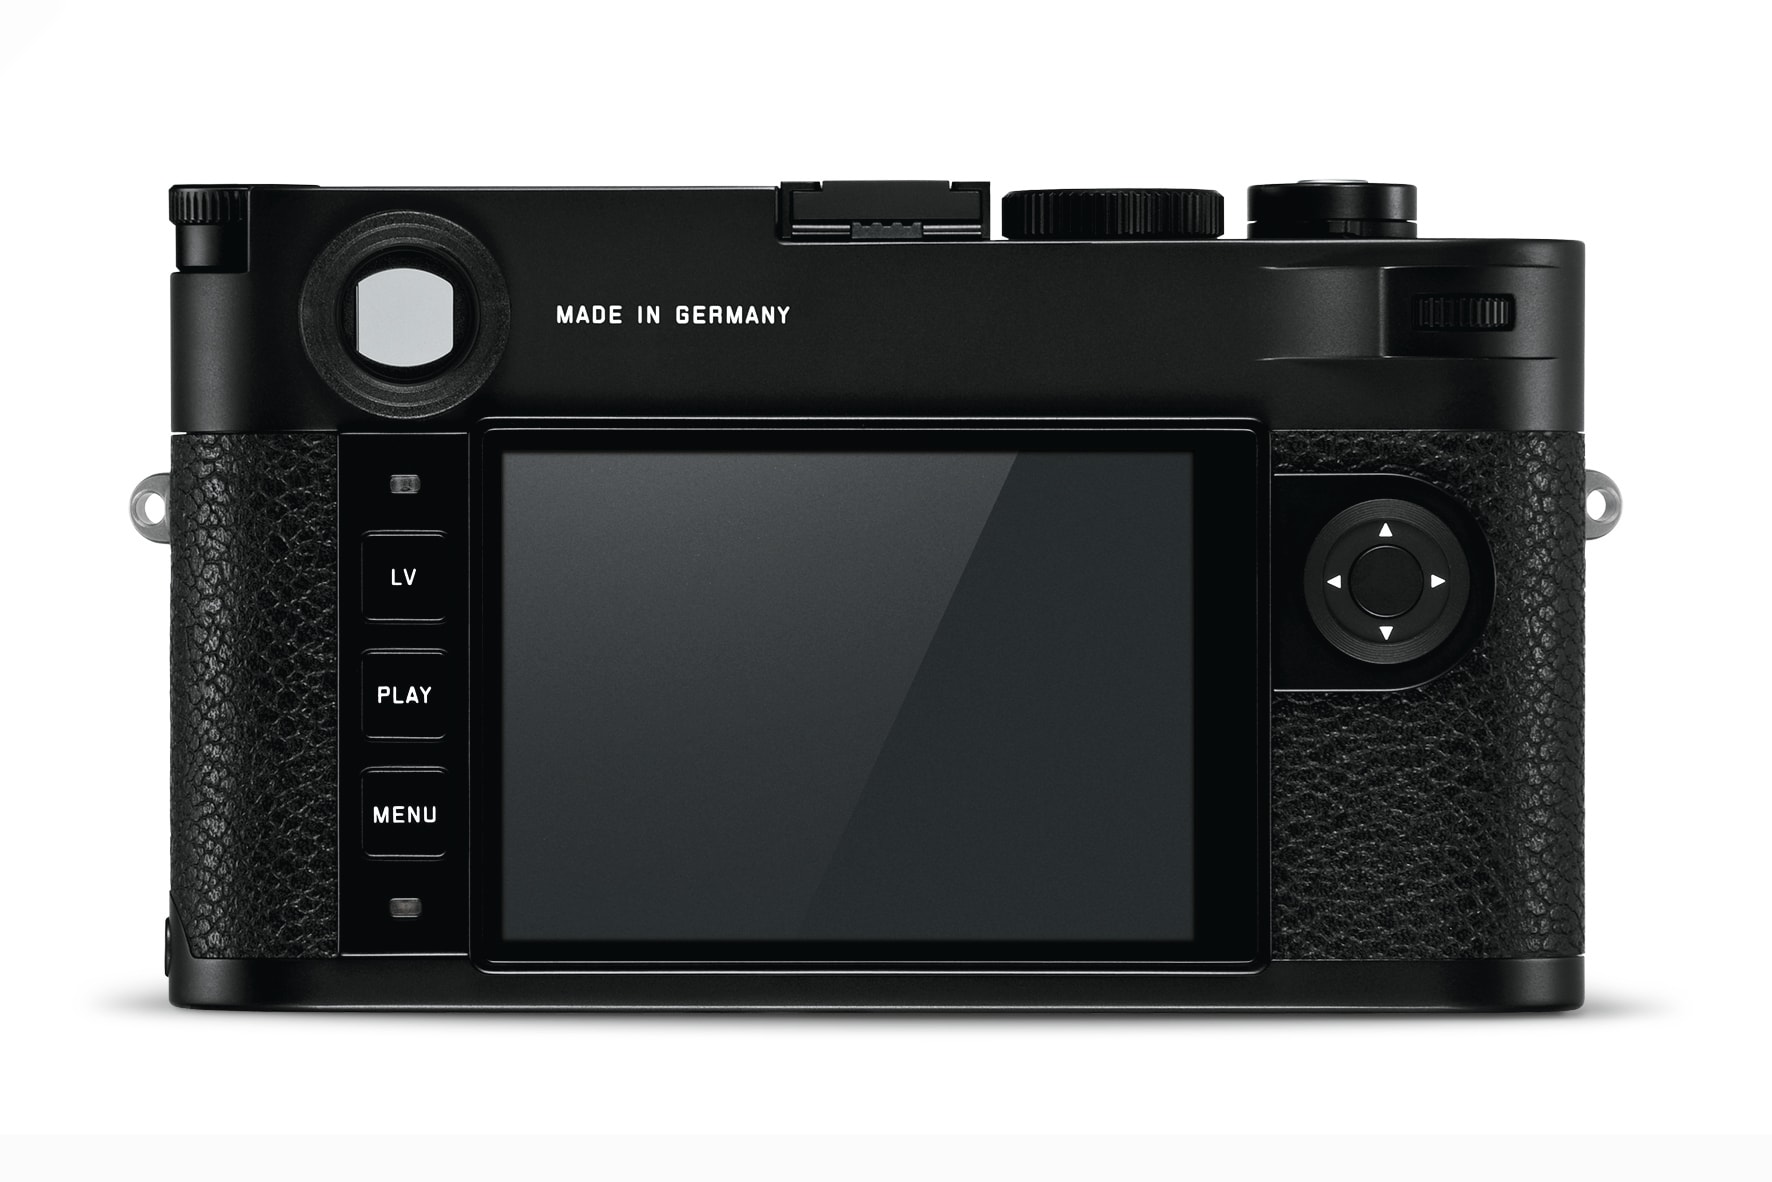 Leica 發佈新一代型號旁軸相機 M10-P